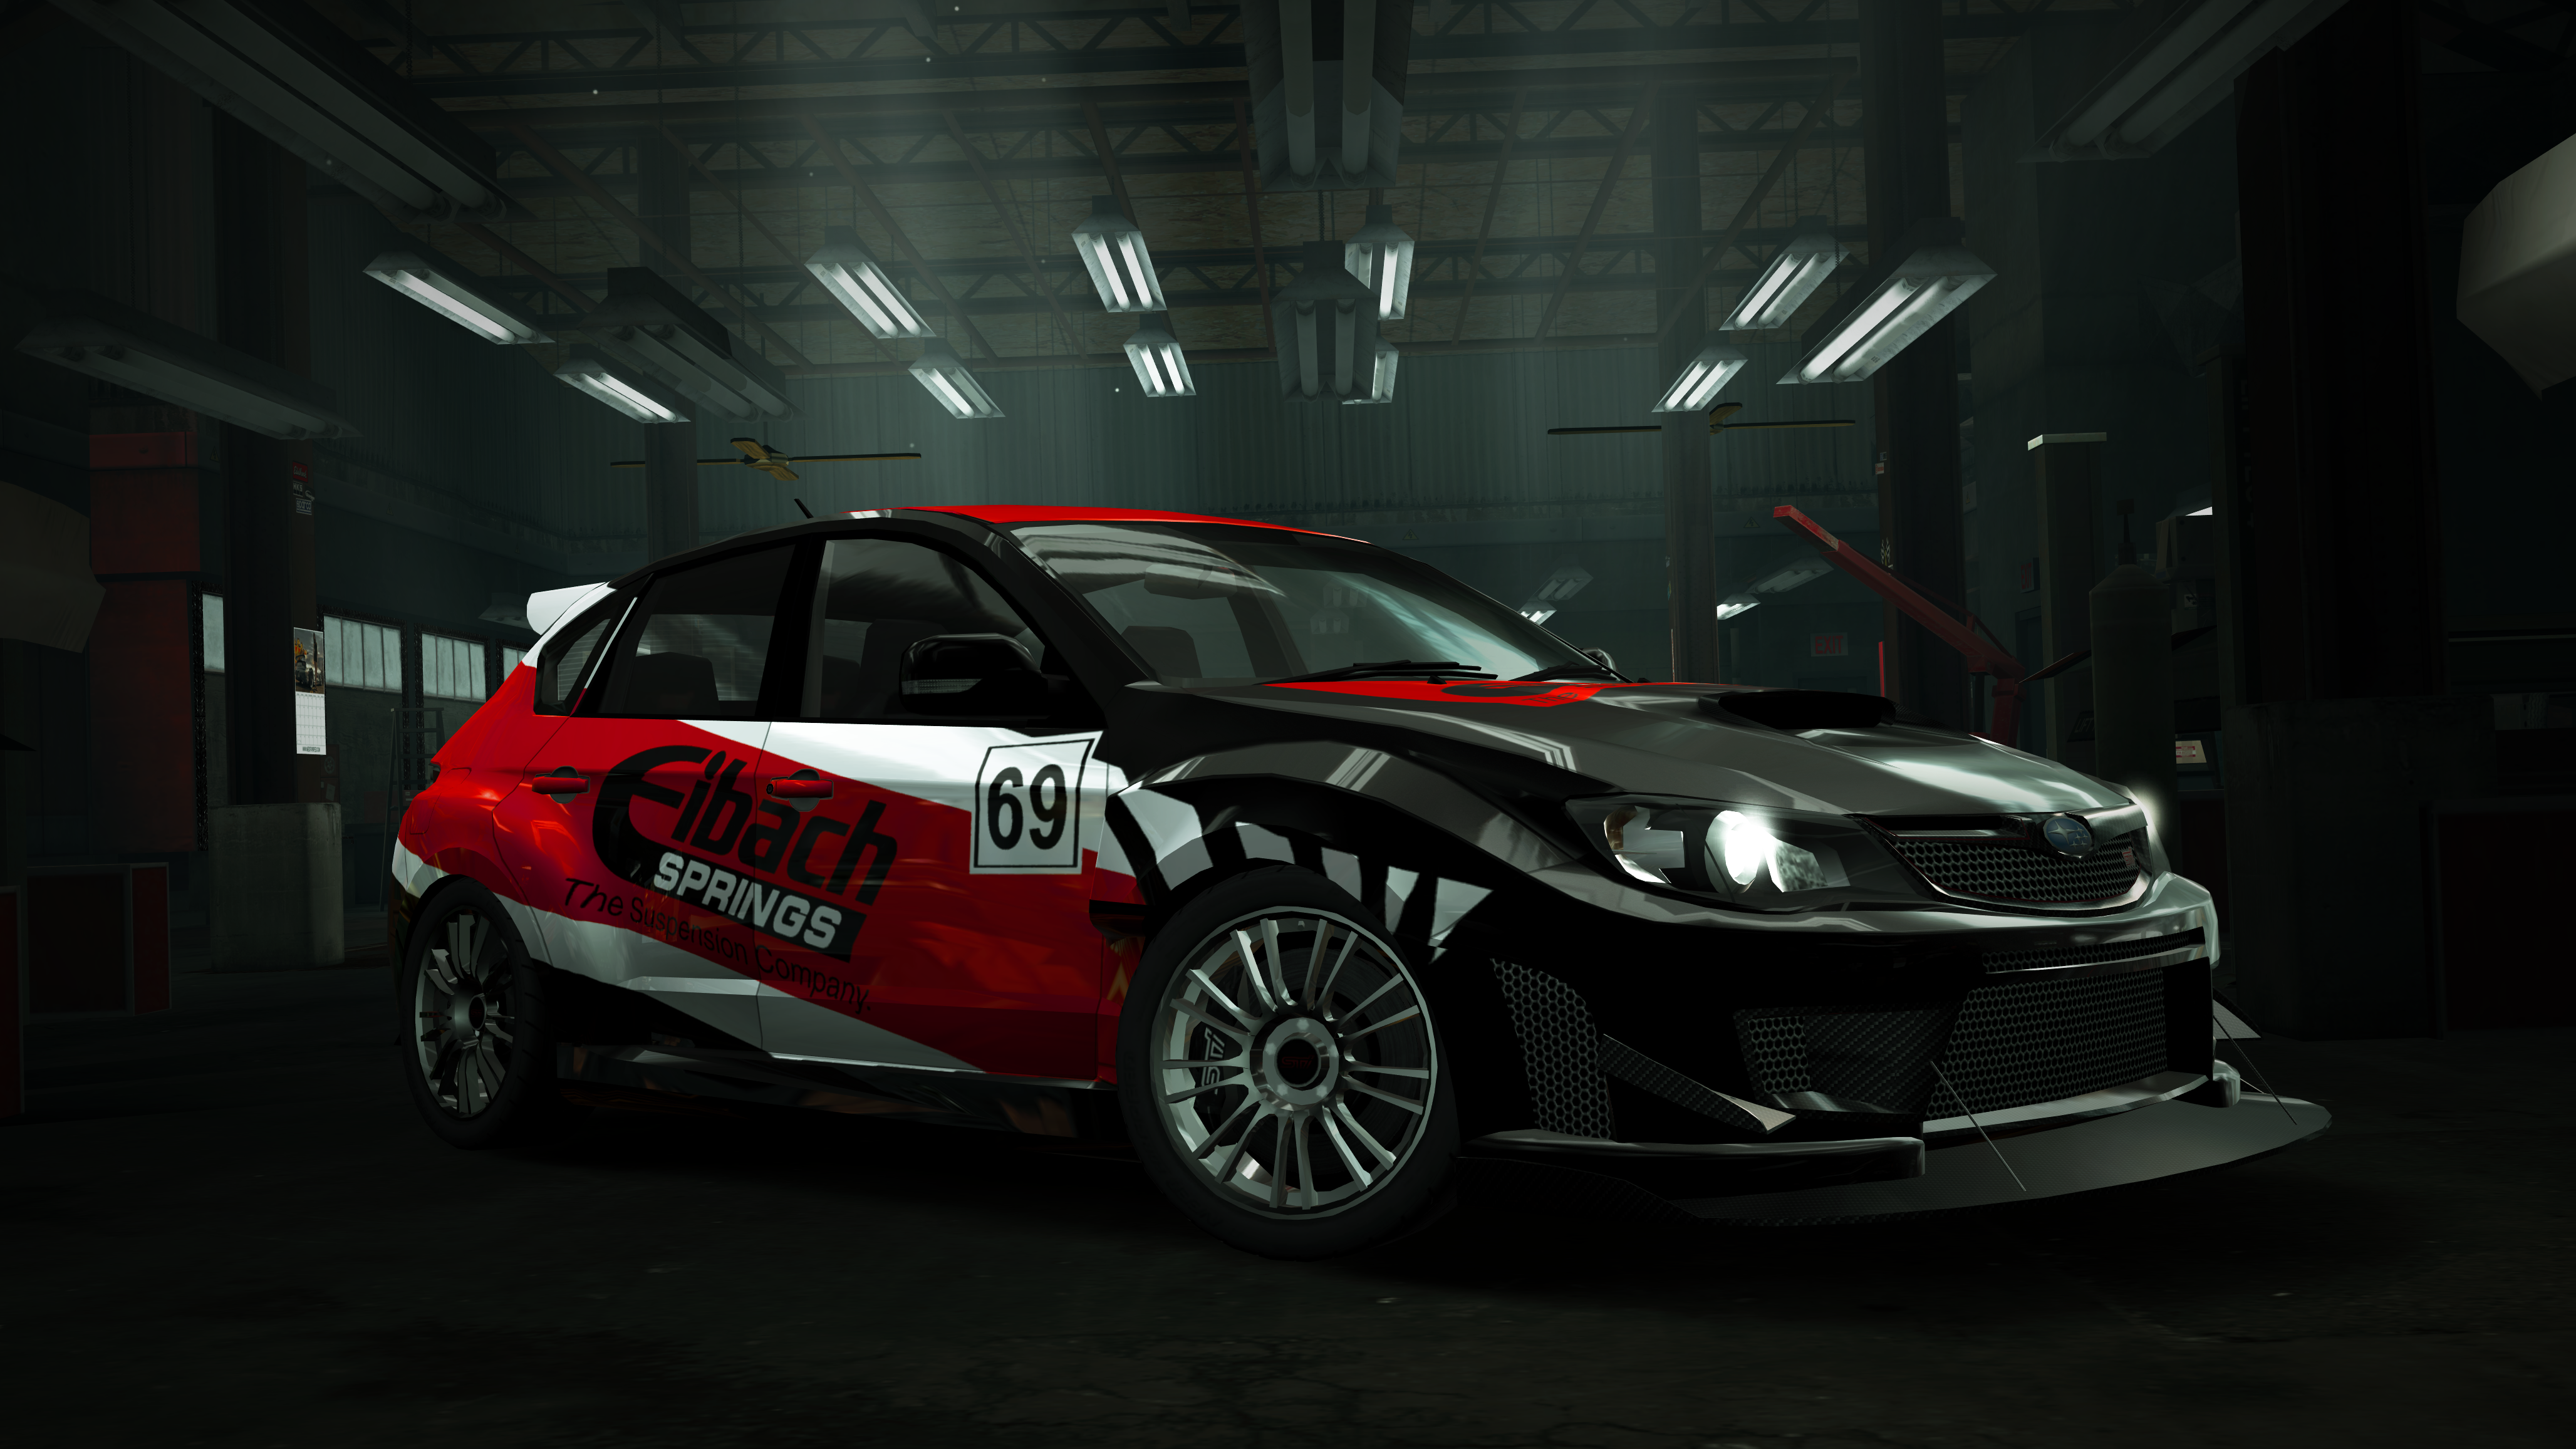 Need For Speed Need For Speed World Video Game Car Car Rally Cars Subaru Subaru Impreza WRX STi Hatc 4112x2313